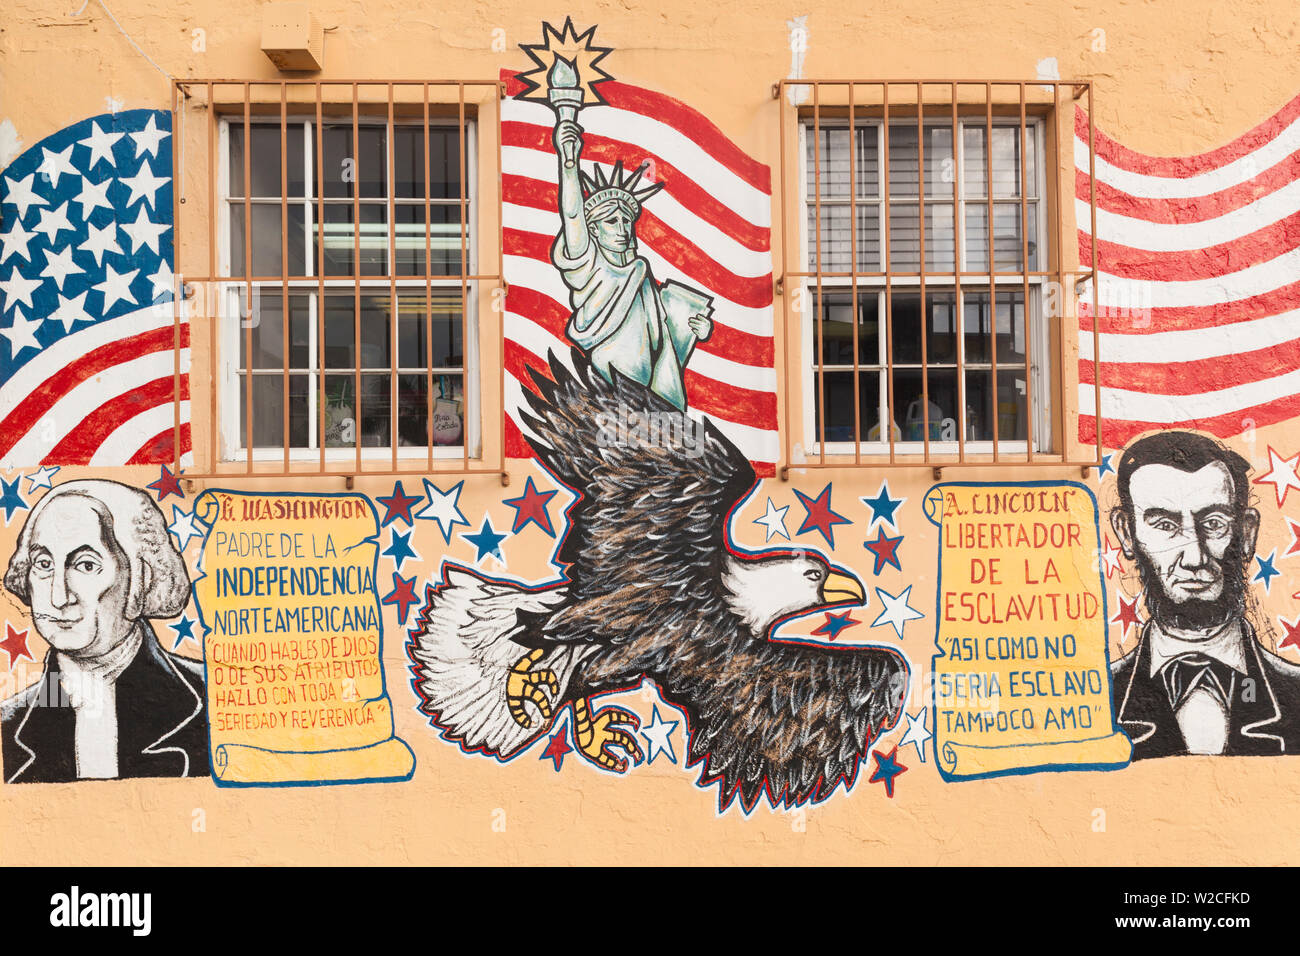 USA, Florida, Miami, Little Havana, Calle Ocho, SW 8th Street, wall mural with George Washington and Abraham Lincoln Stock Photo